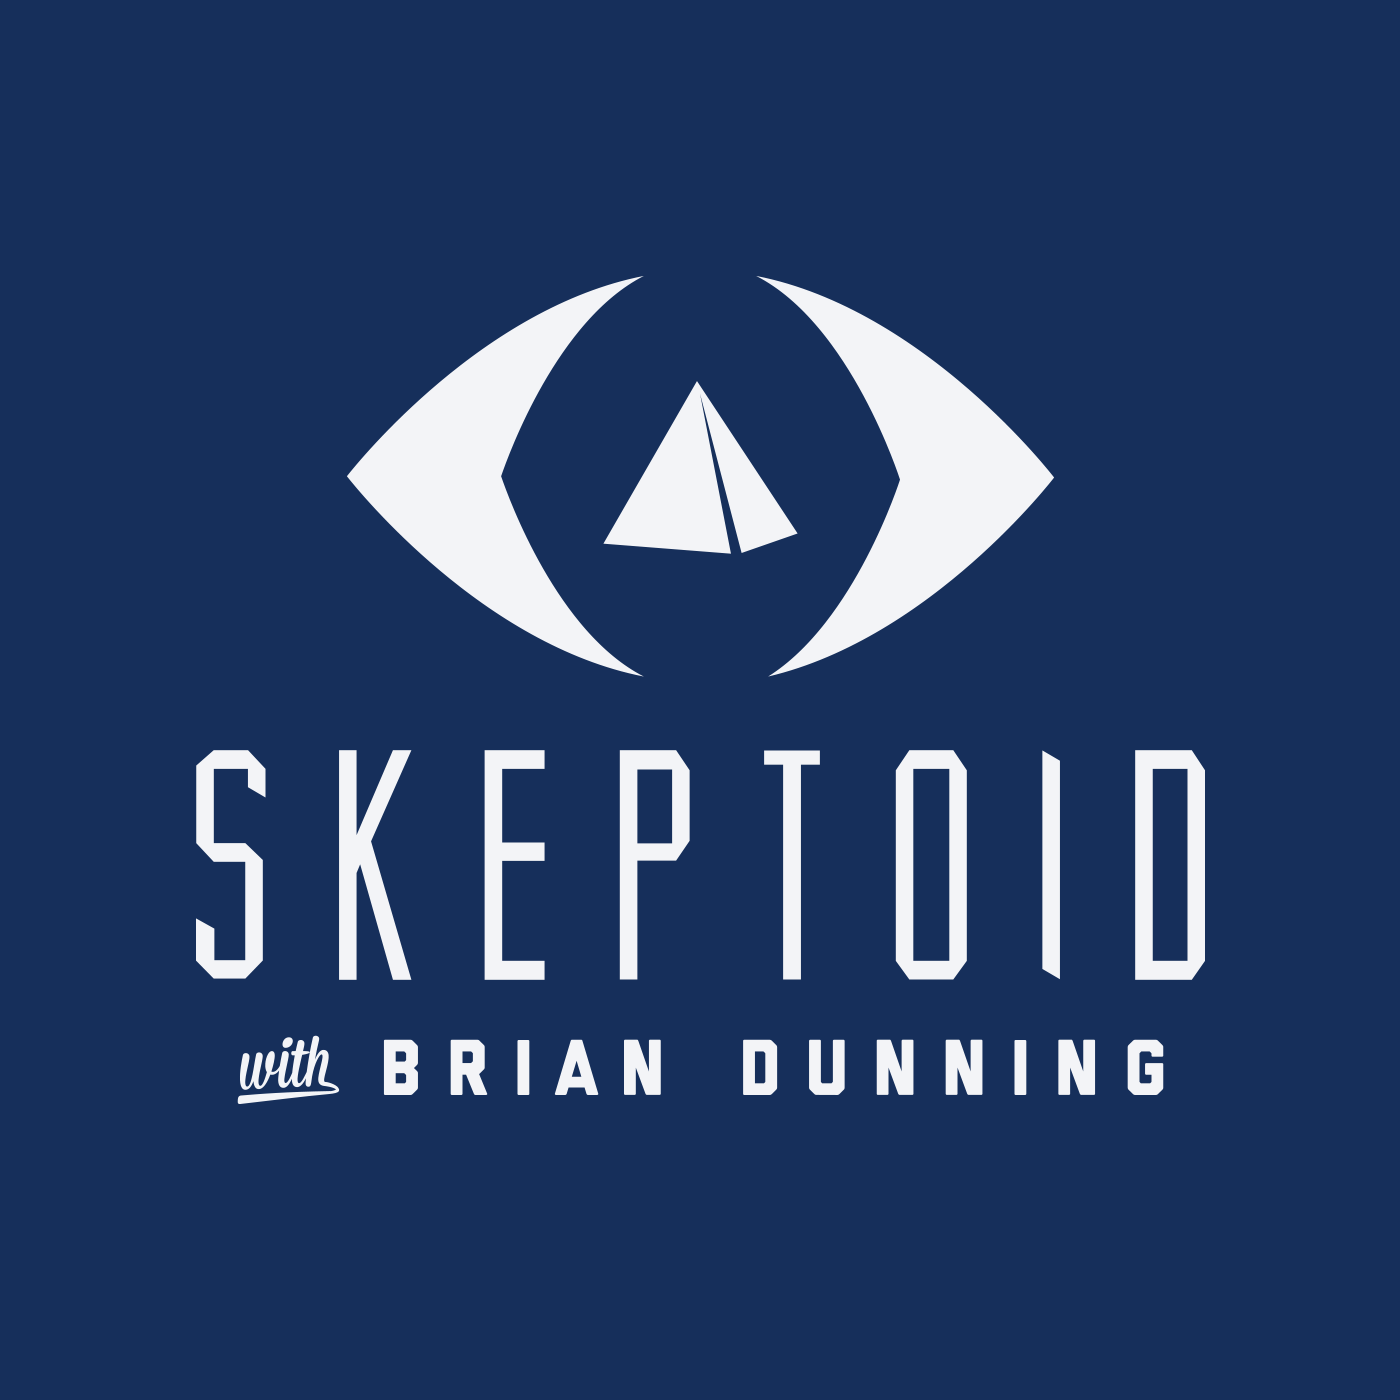 Skeptoid Episode Guide: Aliens & UFOs